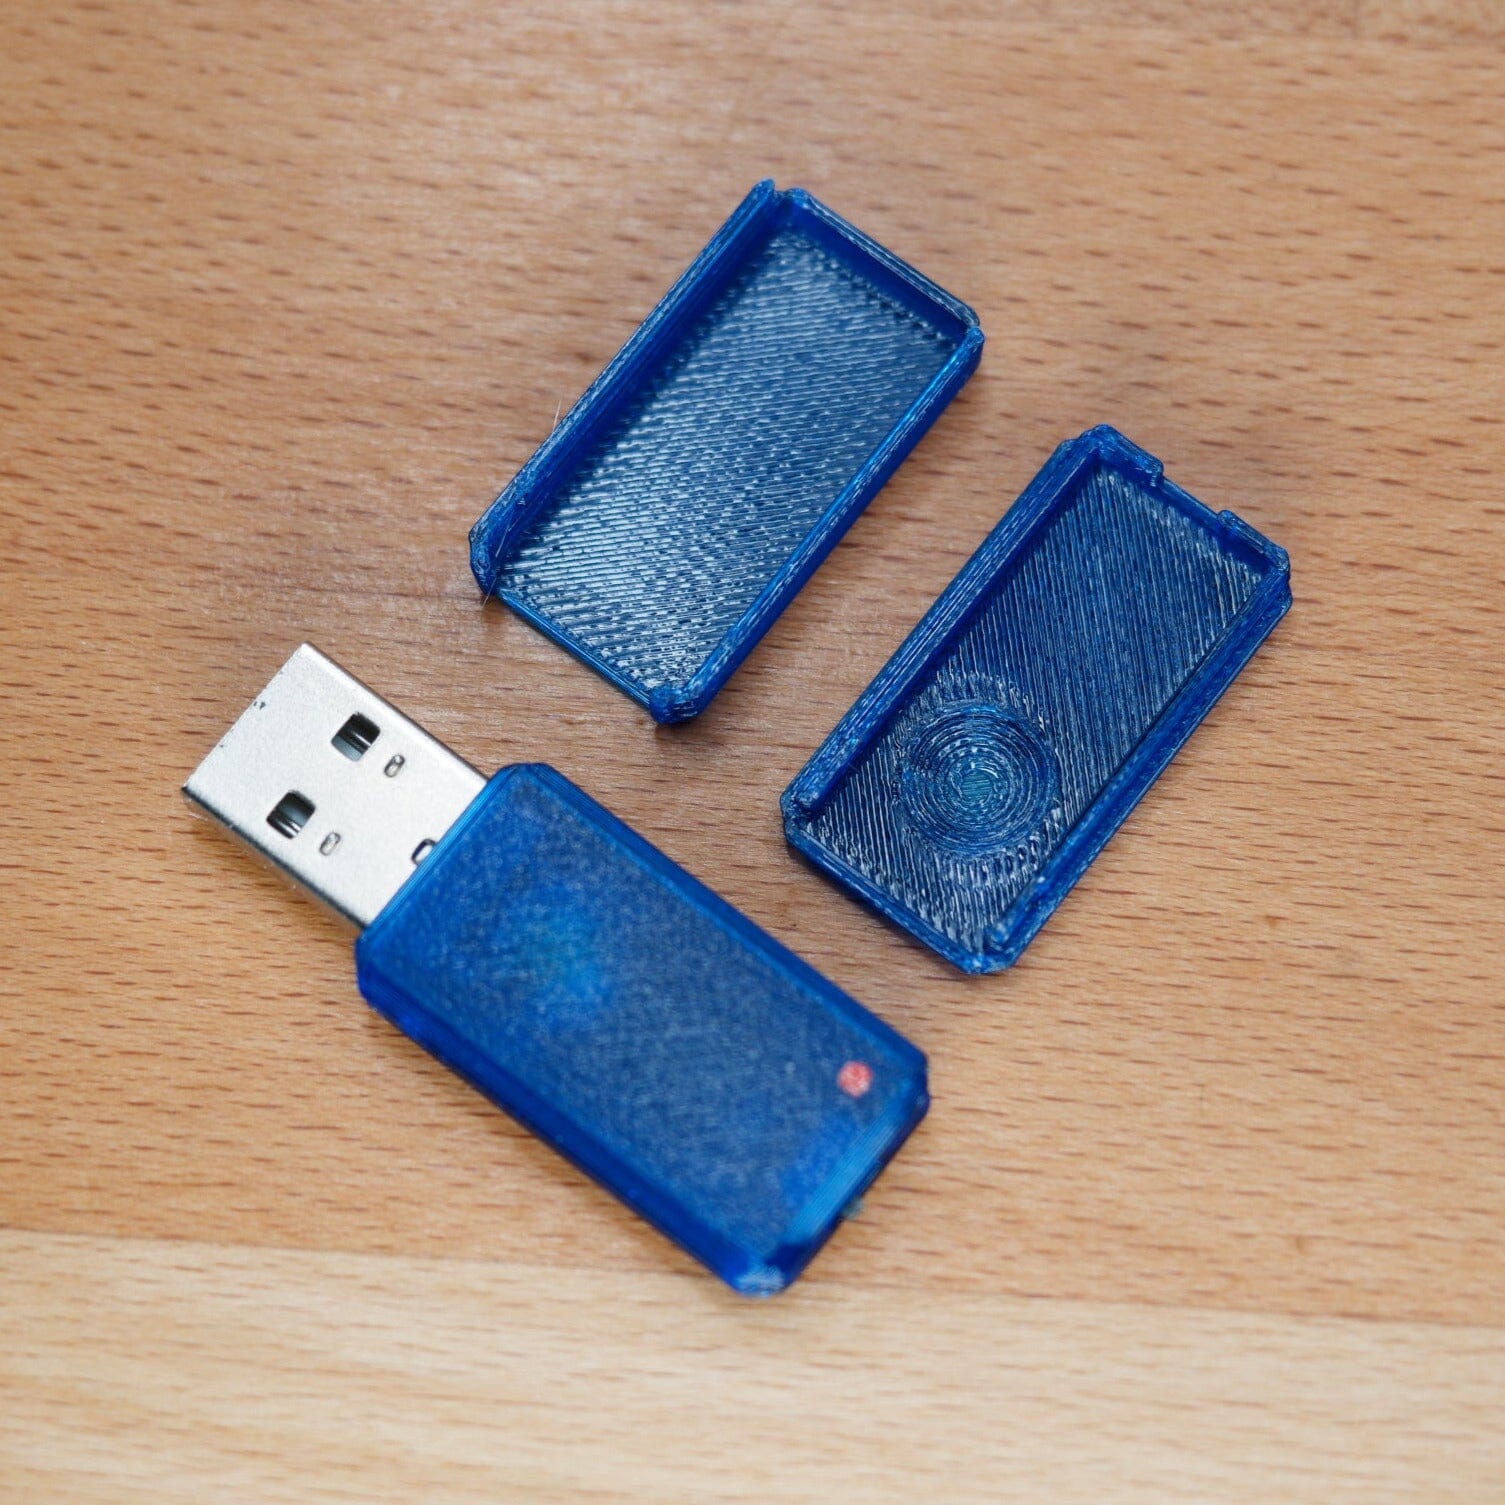 USB Nova with blue Case